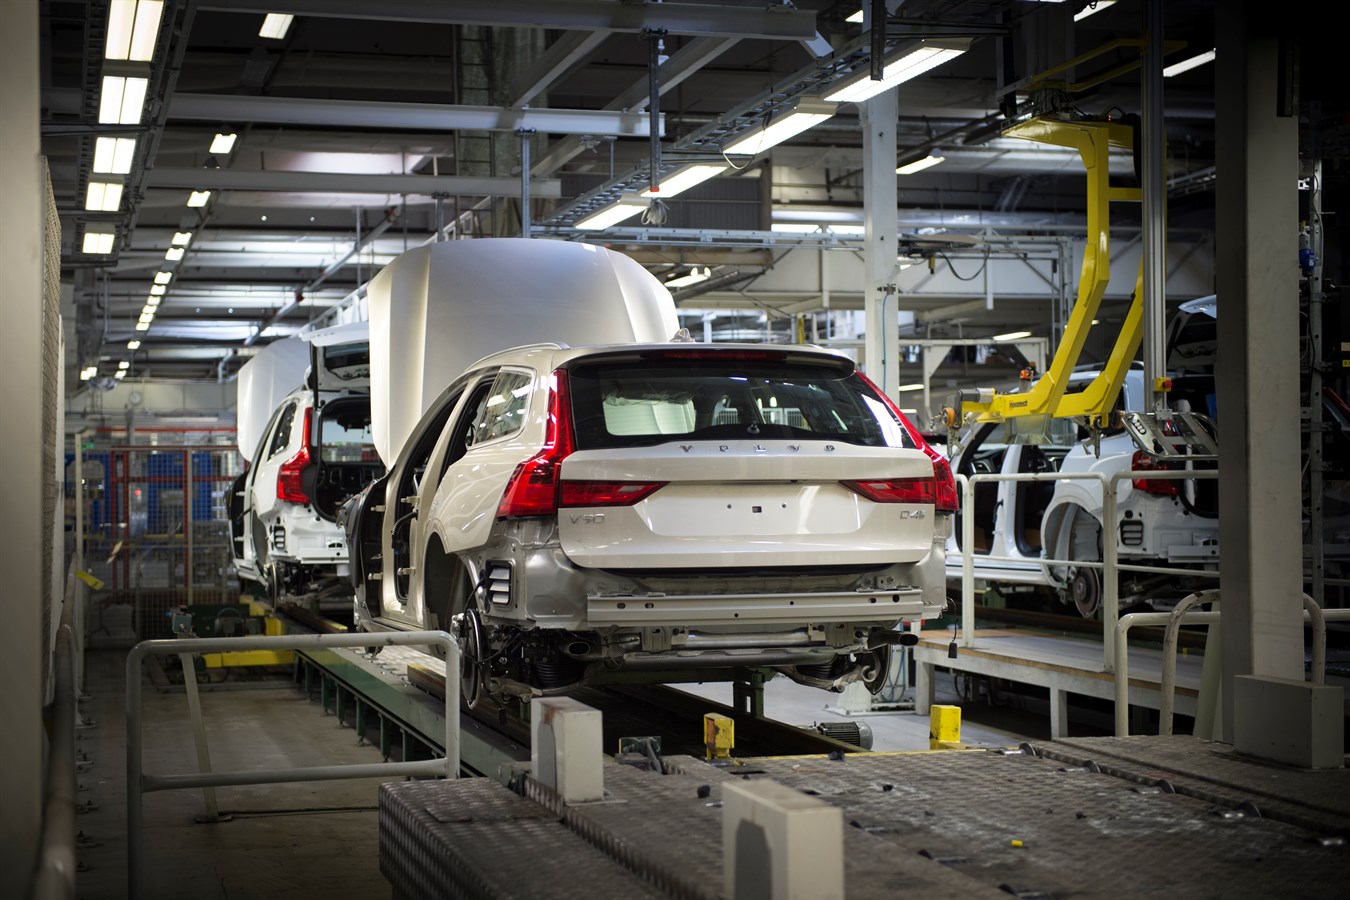 Start of production of new Volvo V90 premium estate